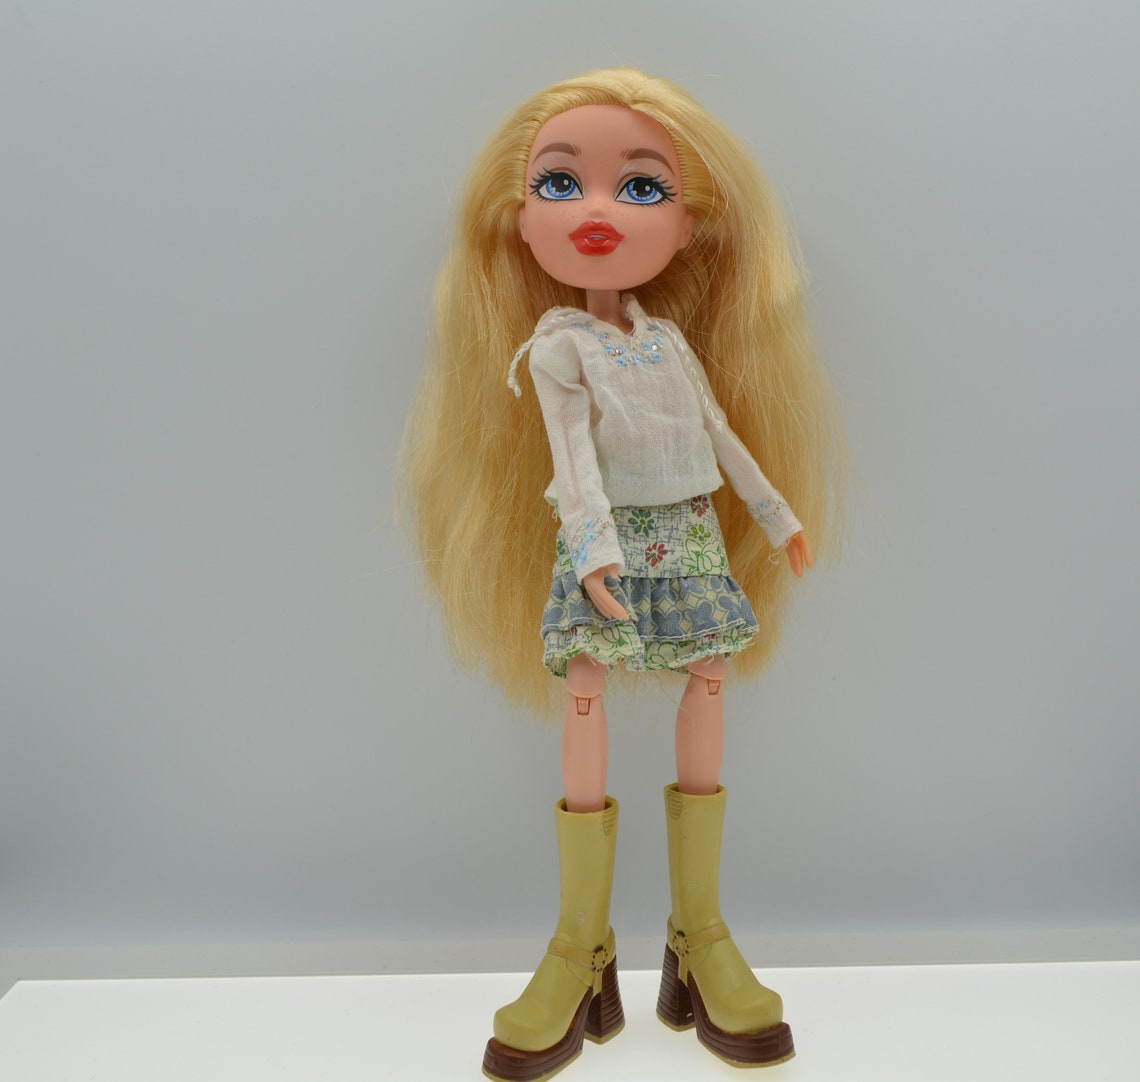 Chloe with BDJ MGA Bratz Doll Fully Dressed For Remake | Etsy